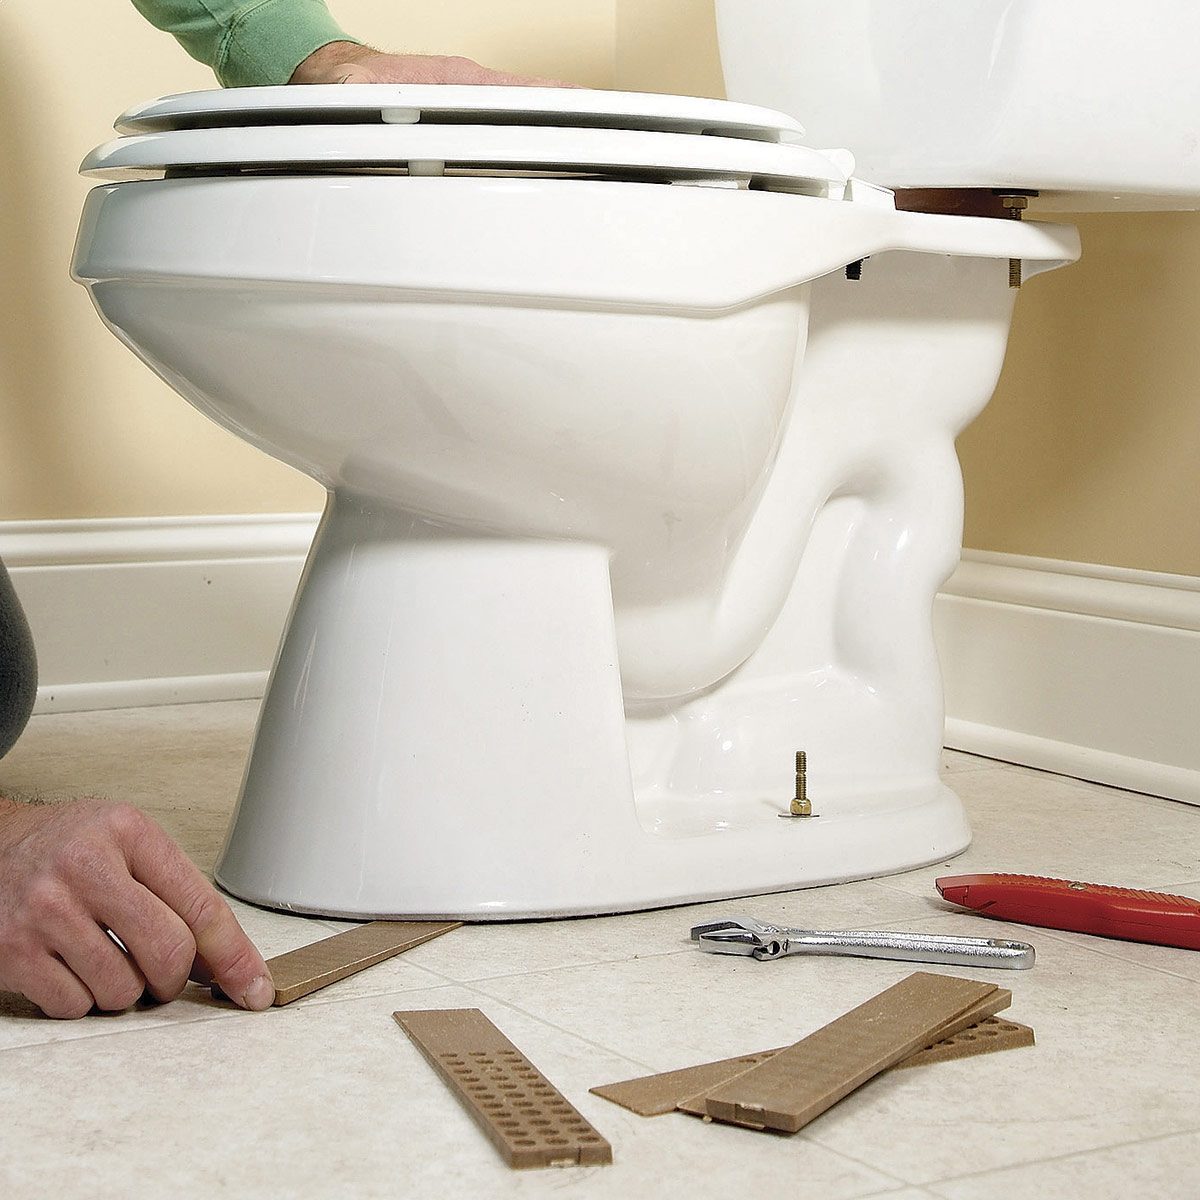 3 Signs You Need Toilet Repair